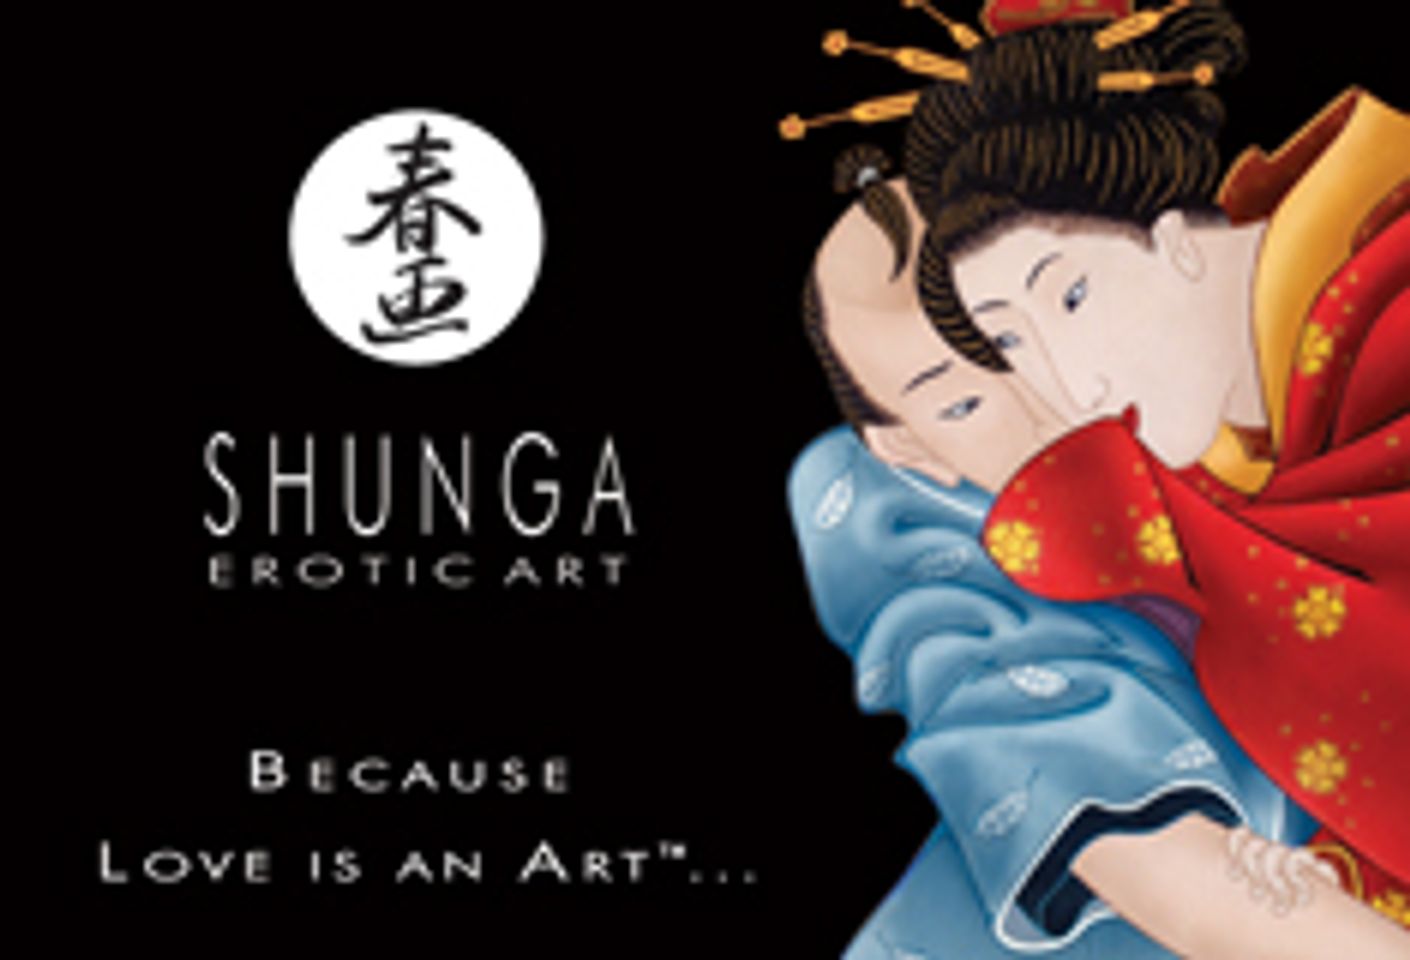 2011: A great year for Shunga Erotic Art